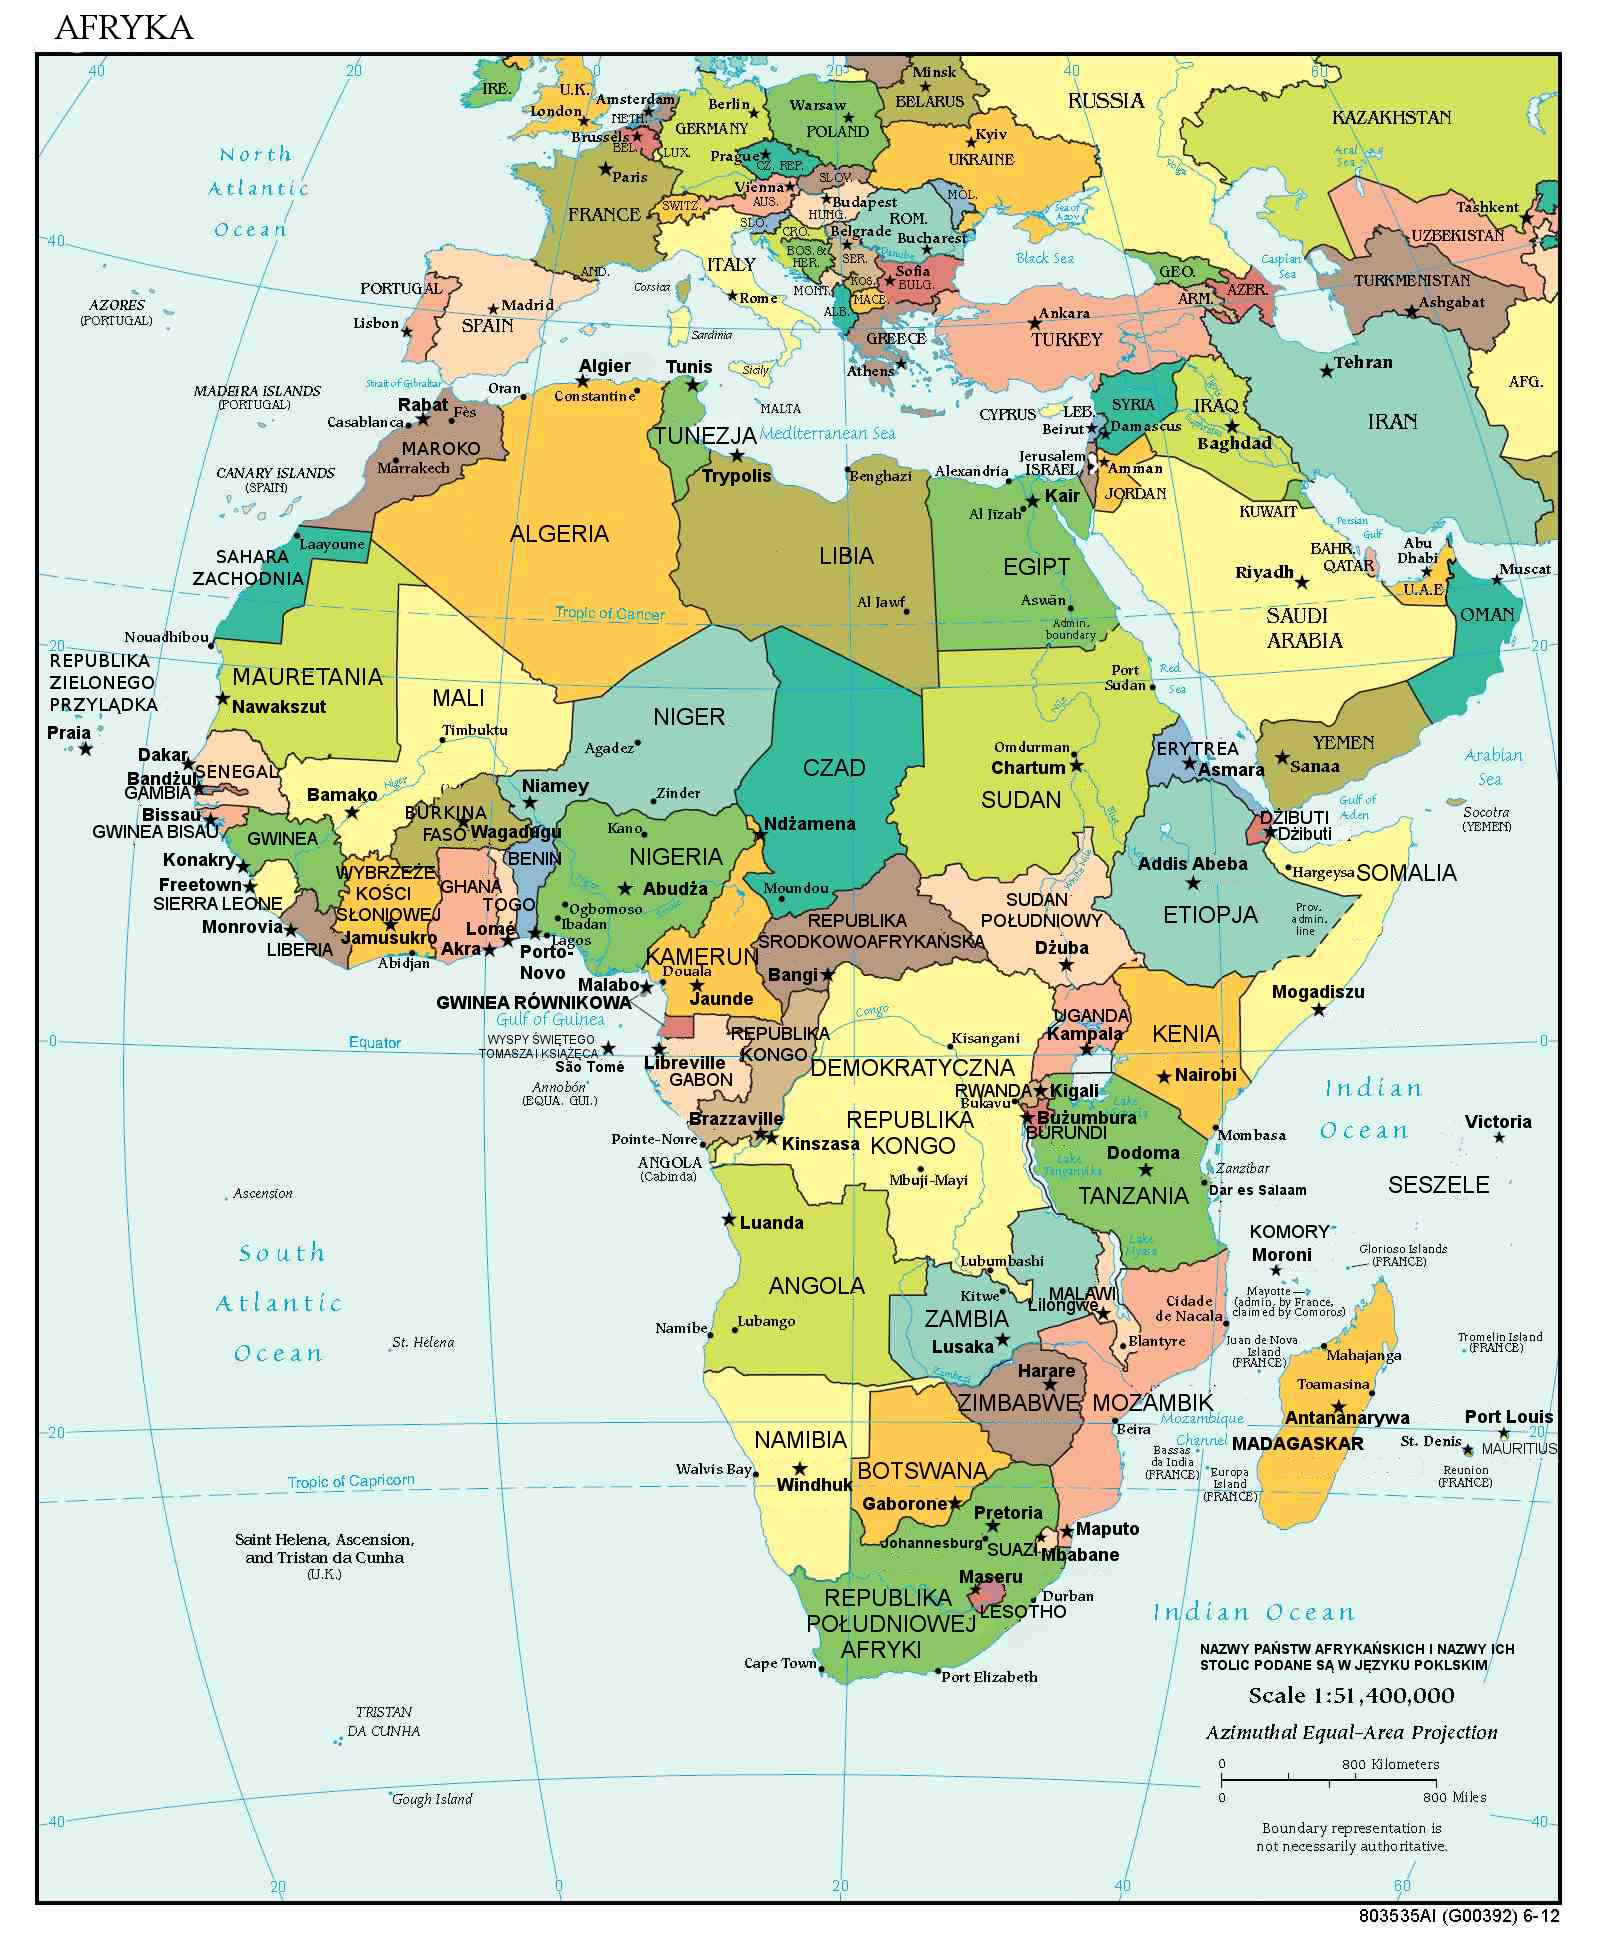  Afryka Mapy Atlas Afryka biz pl